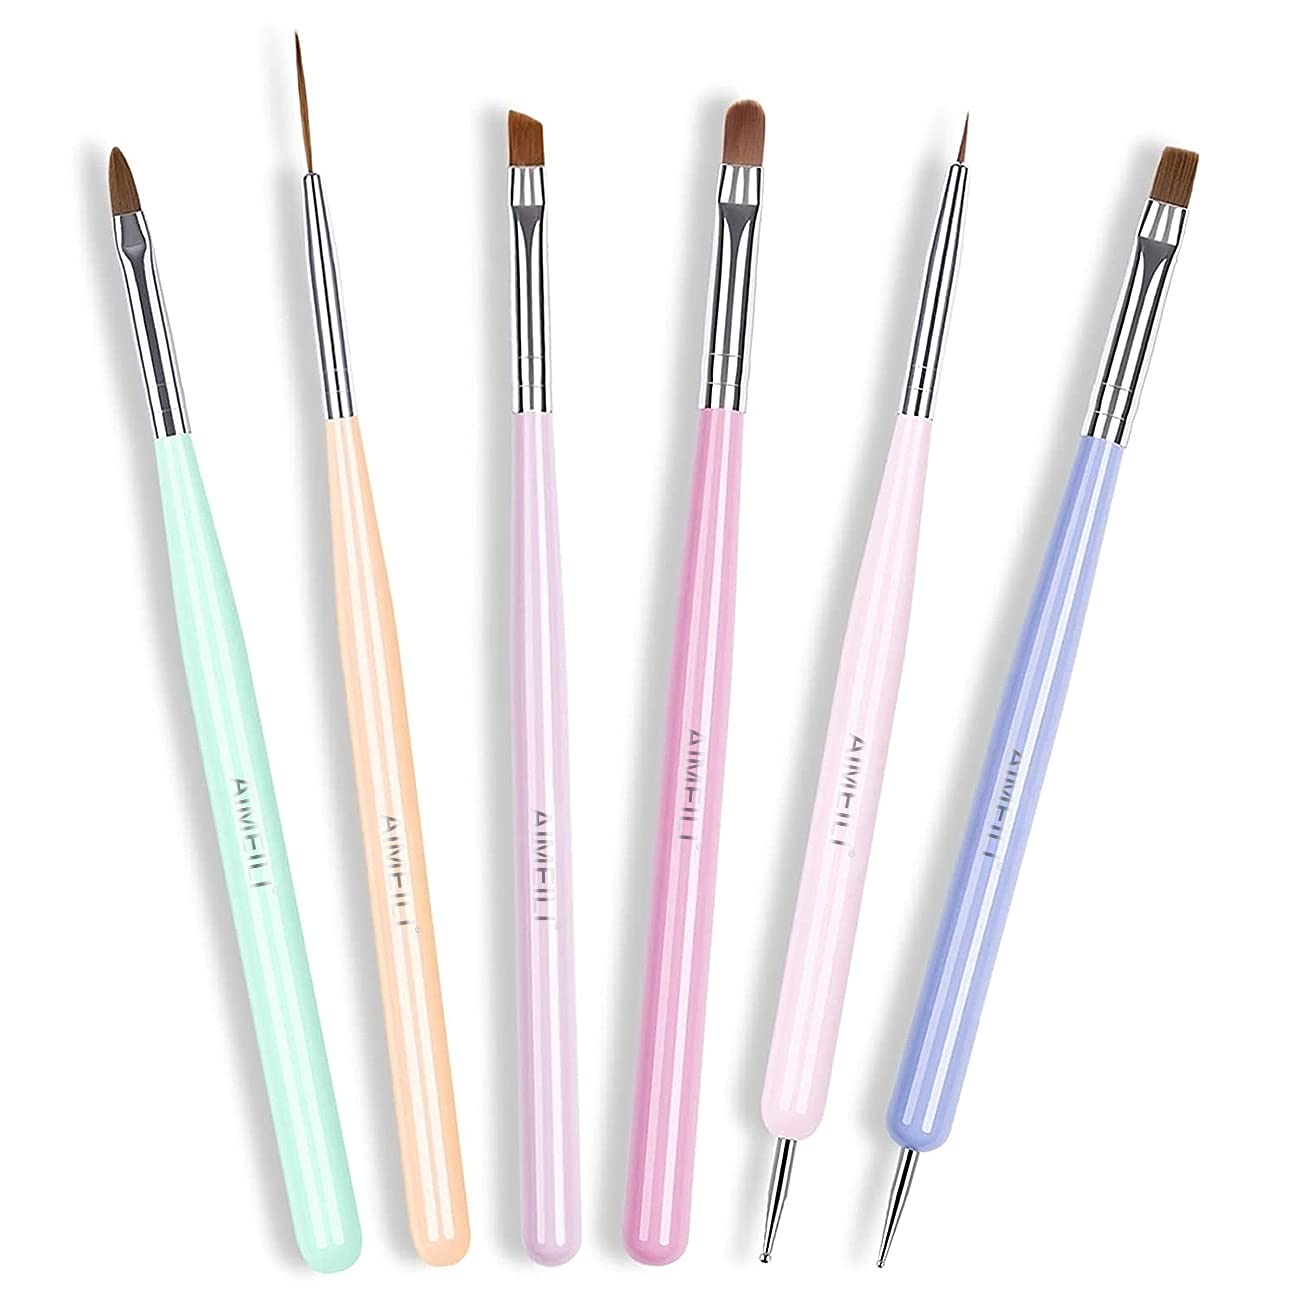 AIMEILI Nail Art Brushes Acrylic Nail Brush Design Pen Set for $3.99 + Free Shipping w/ Prime or Orders $25+